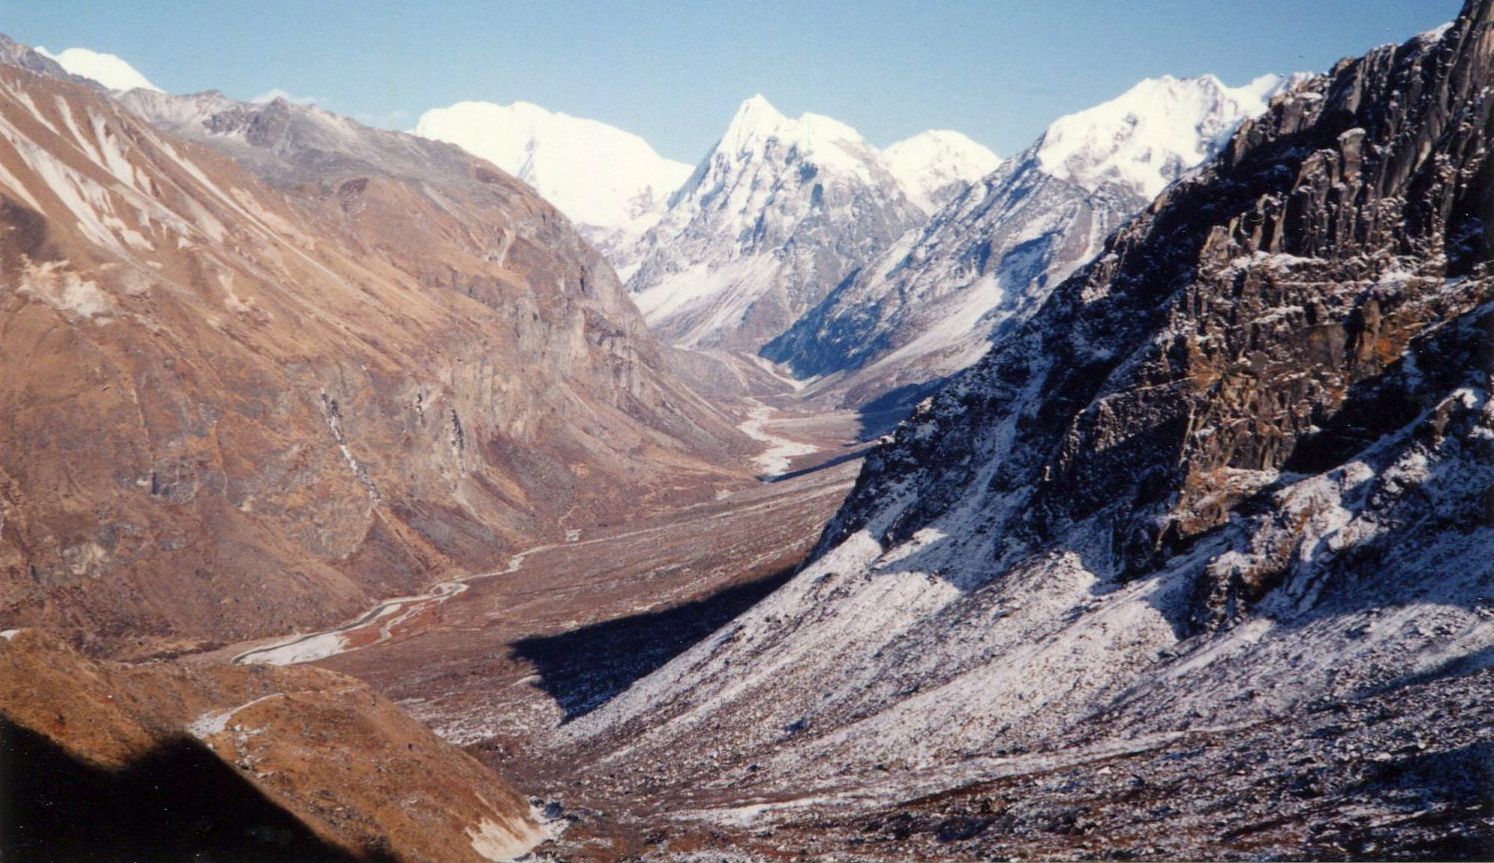 Mt.Langshisa Ri and Dome Blanc  on ascent to Ganja La